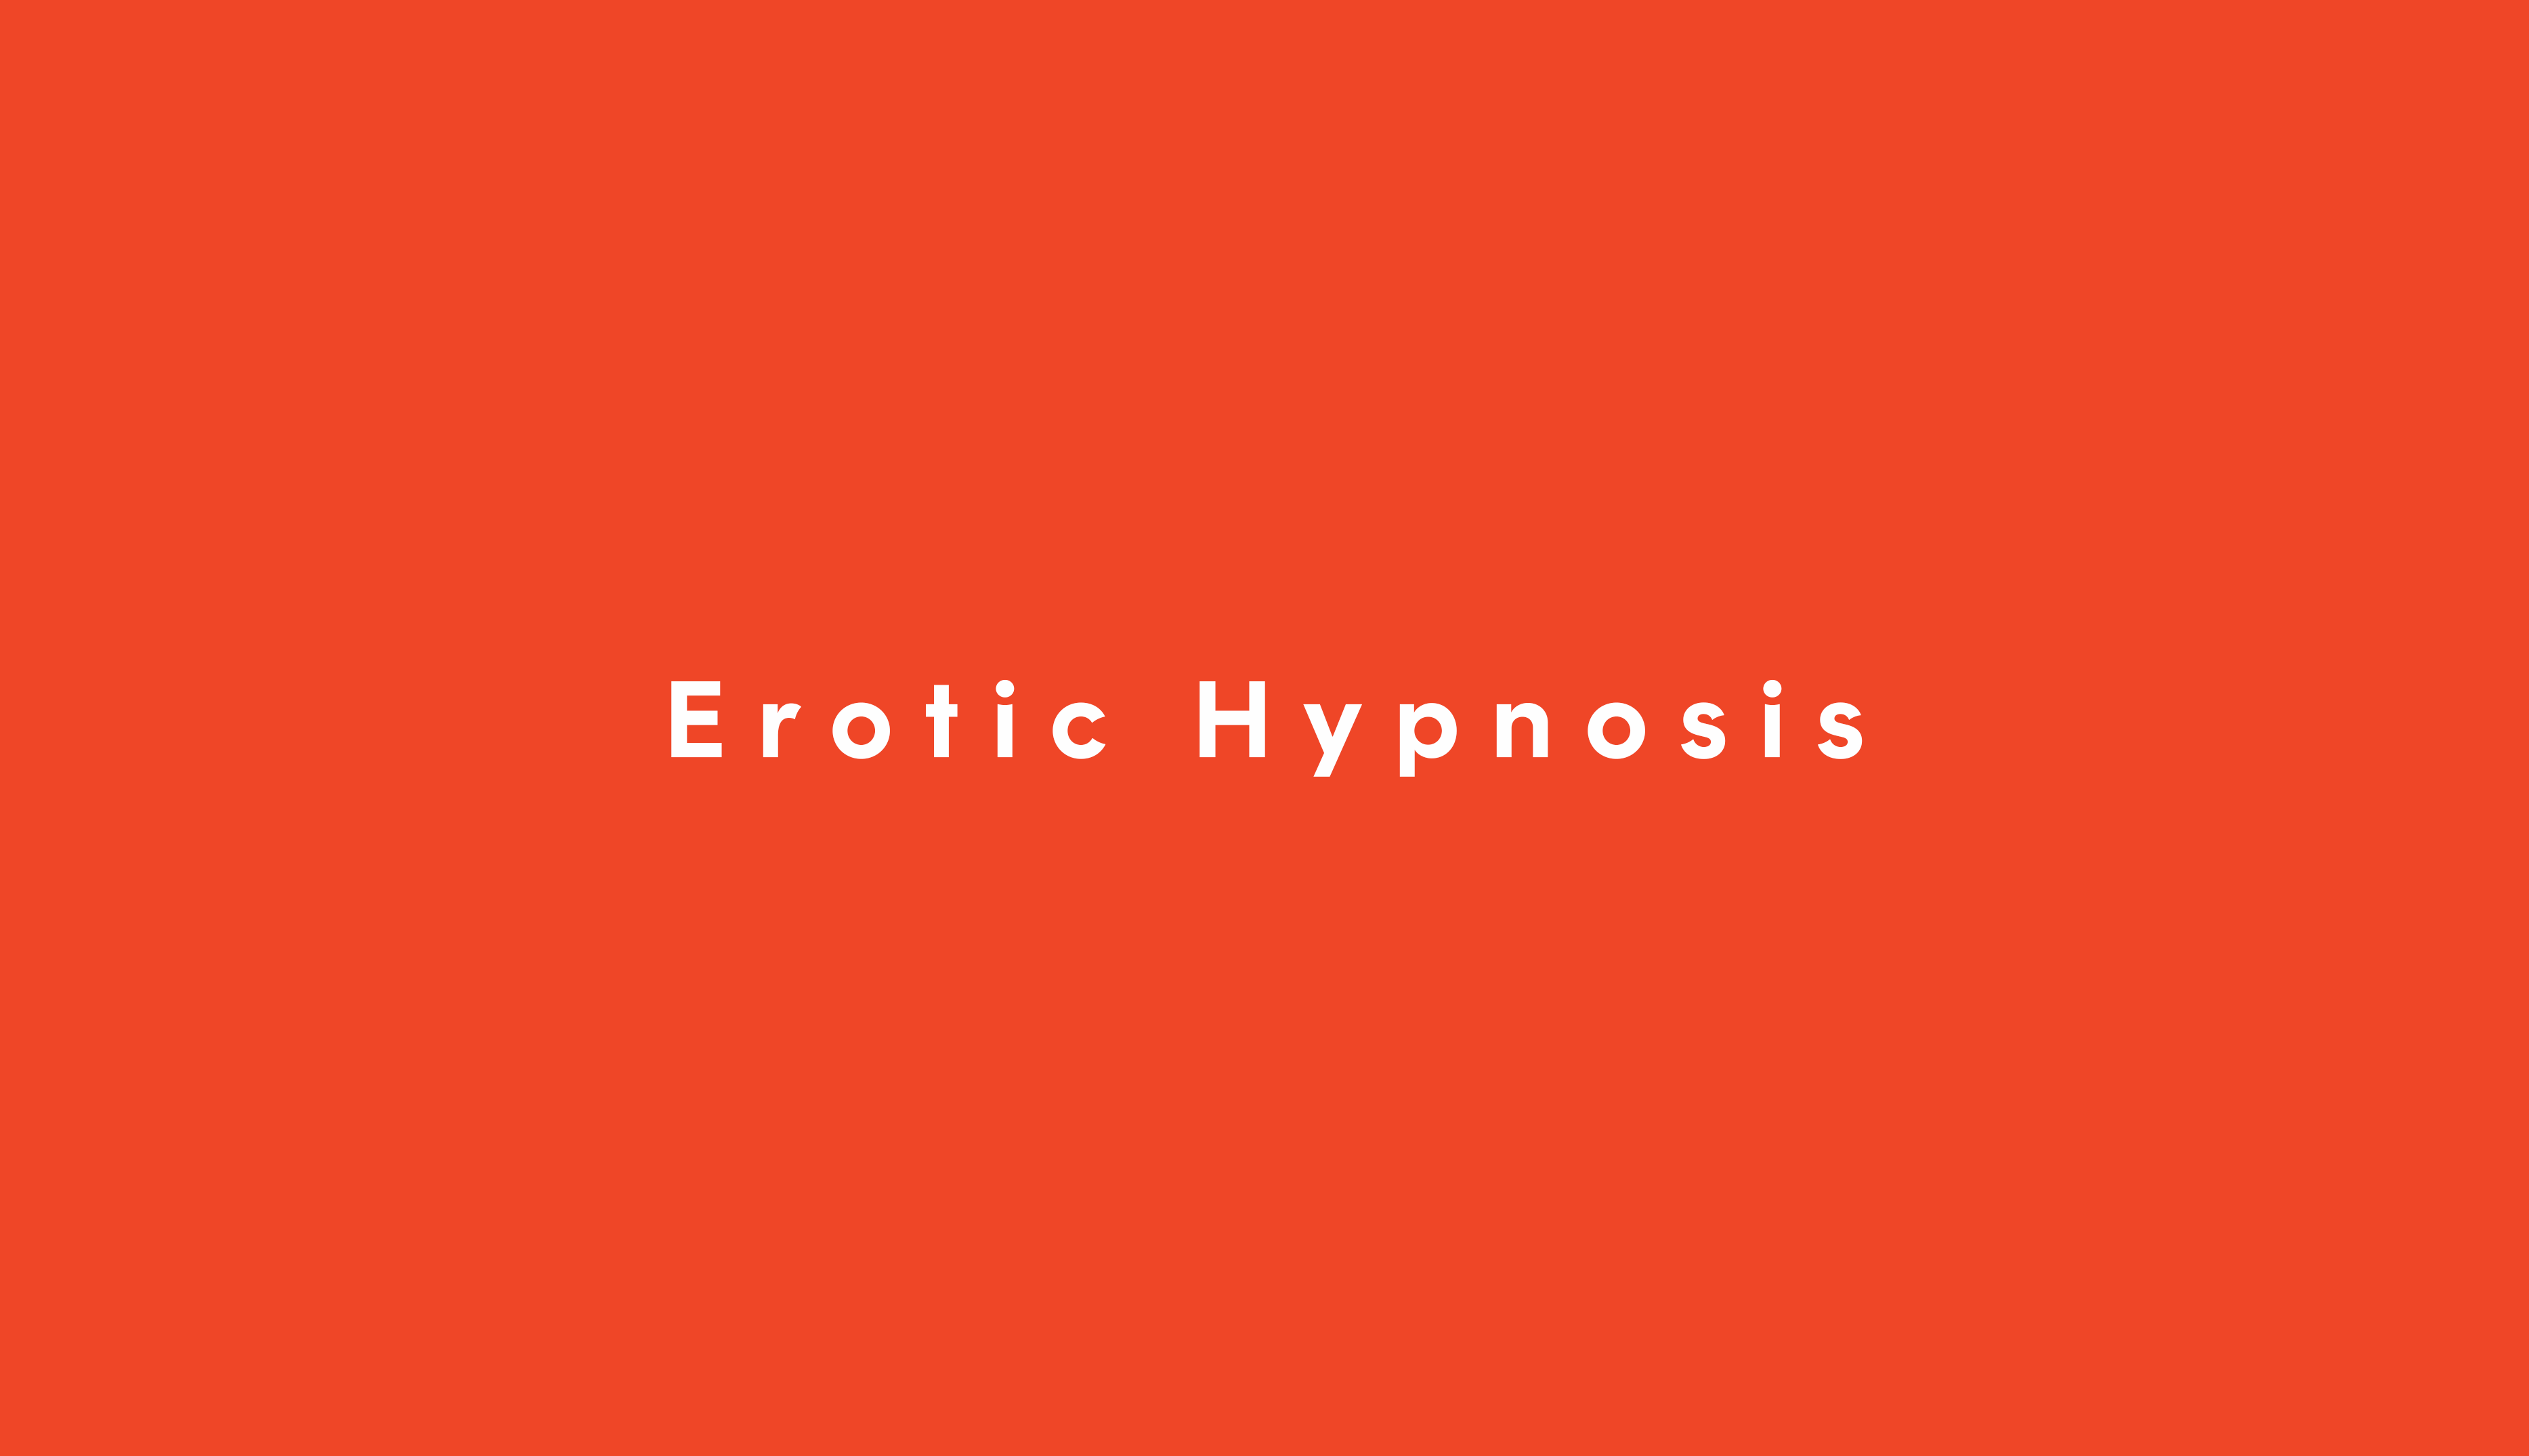 Secret hypnosis erotic the of 10 Erotic